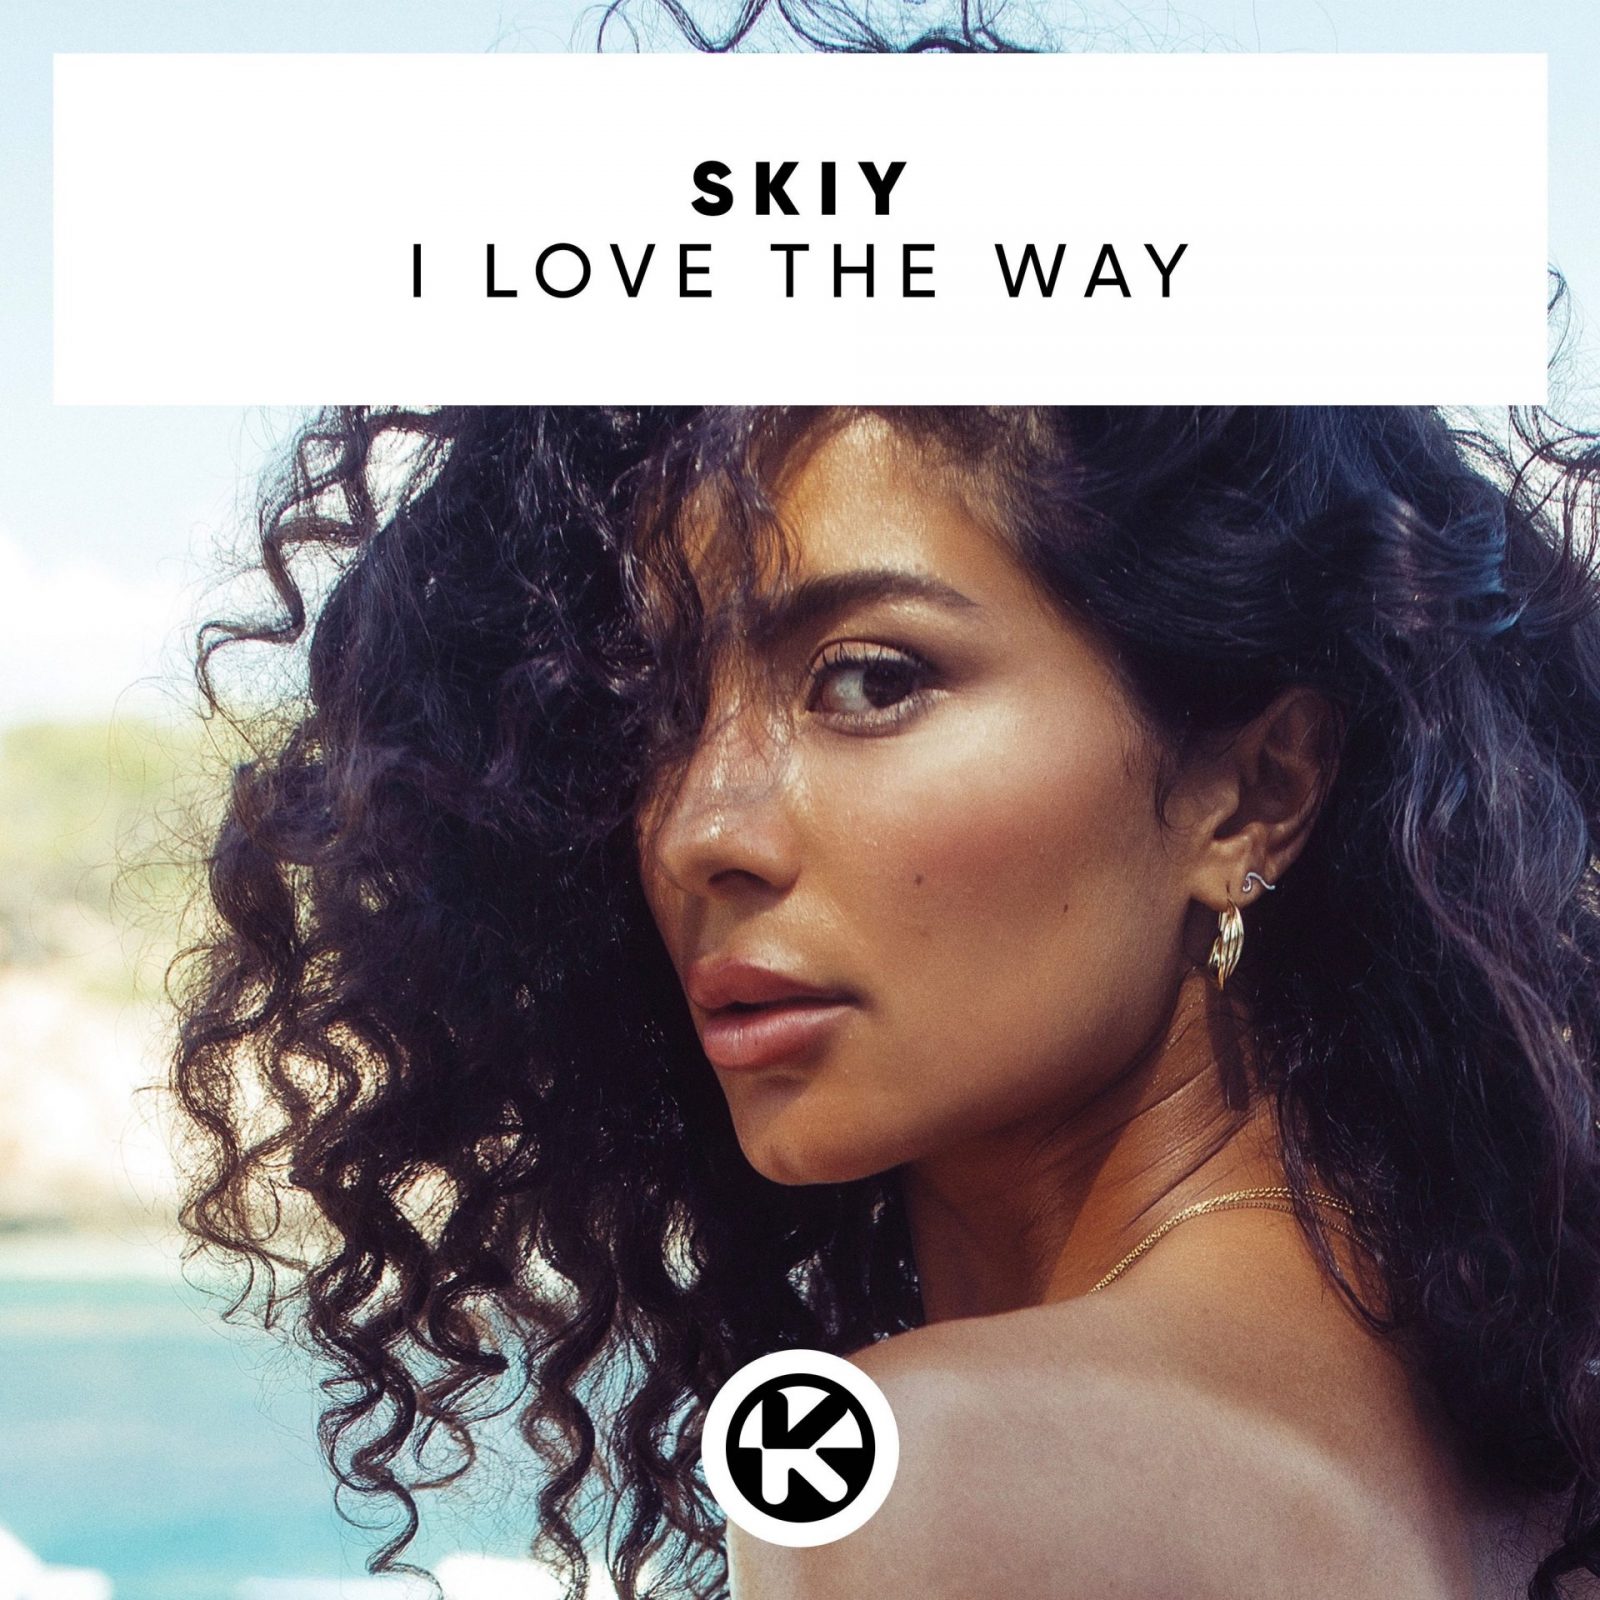 SKIY – I LOVE THE WAY